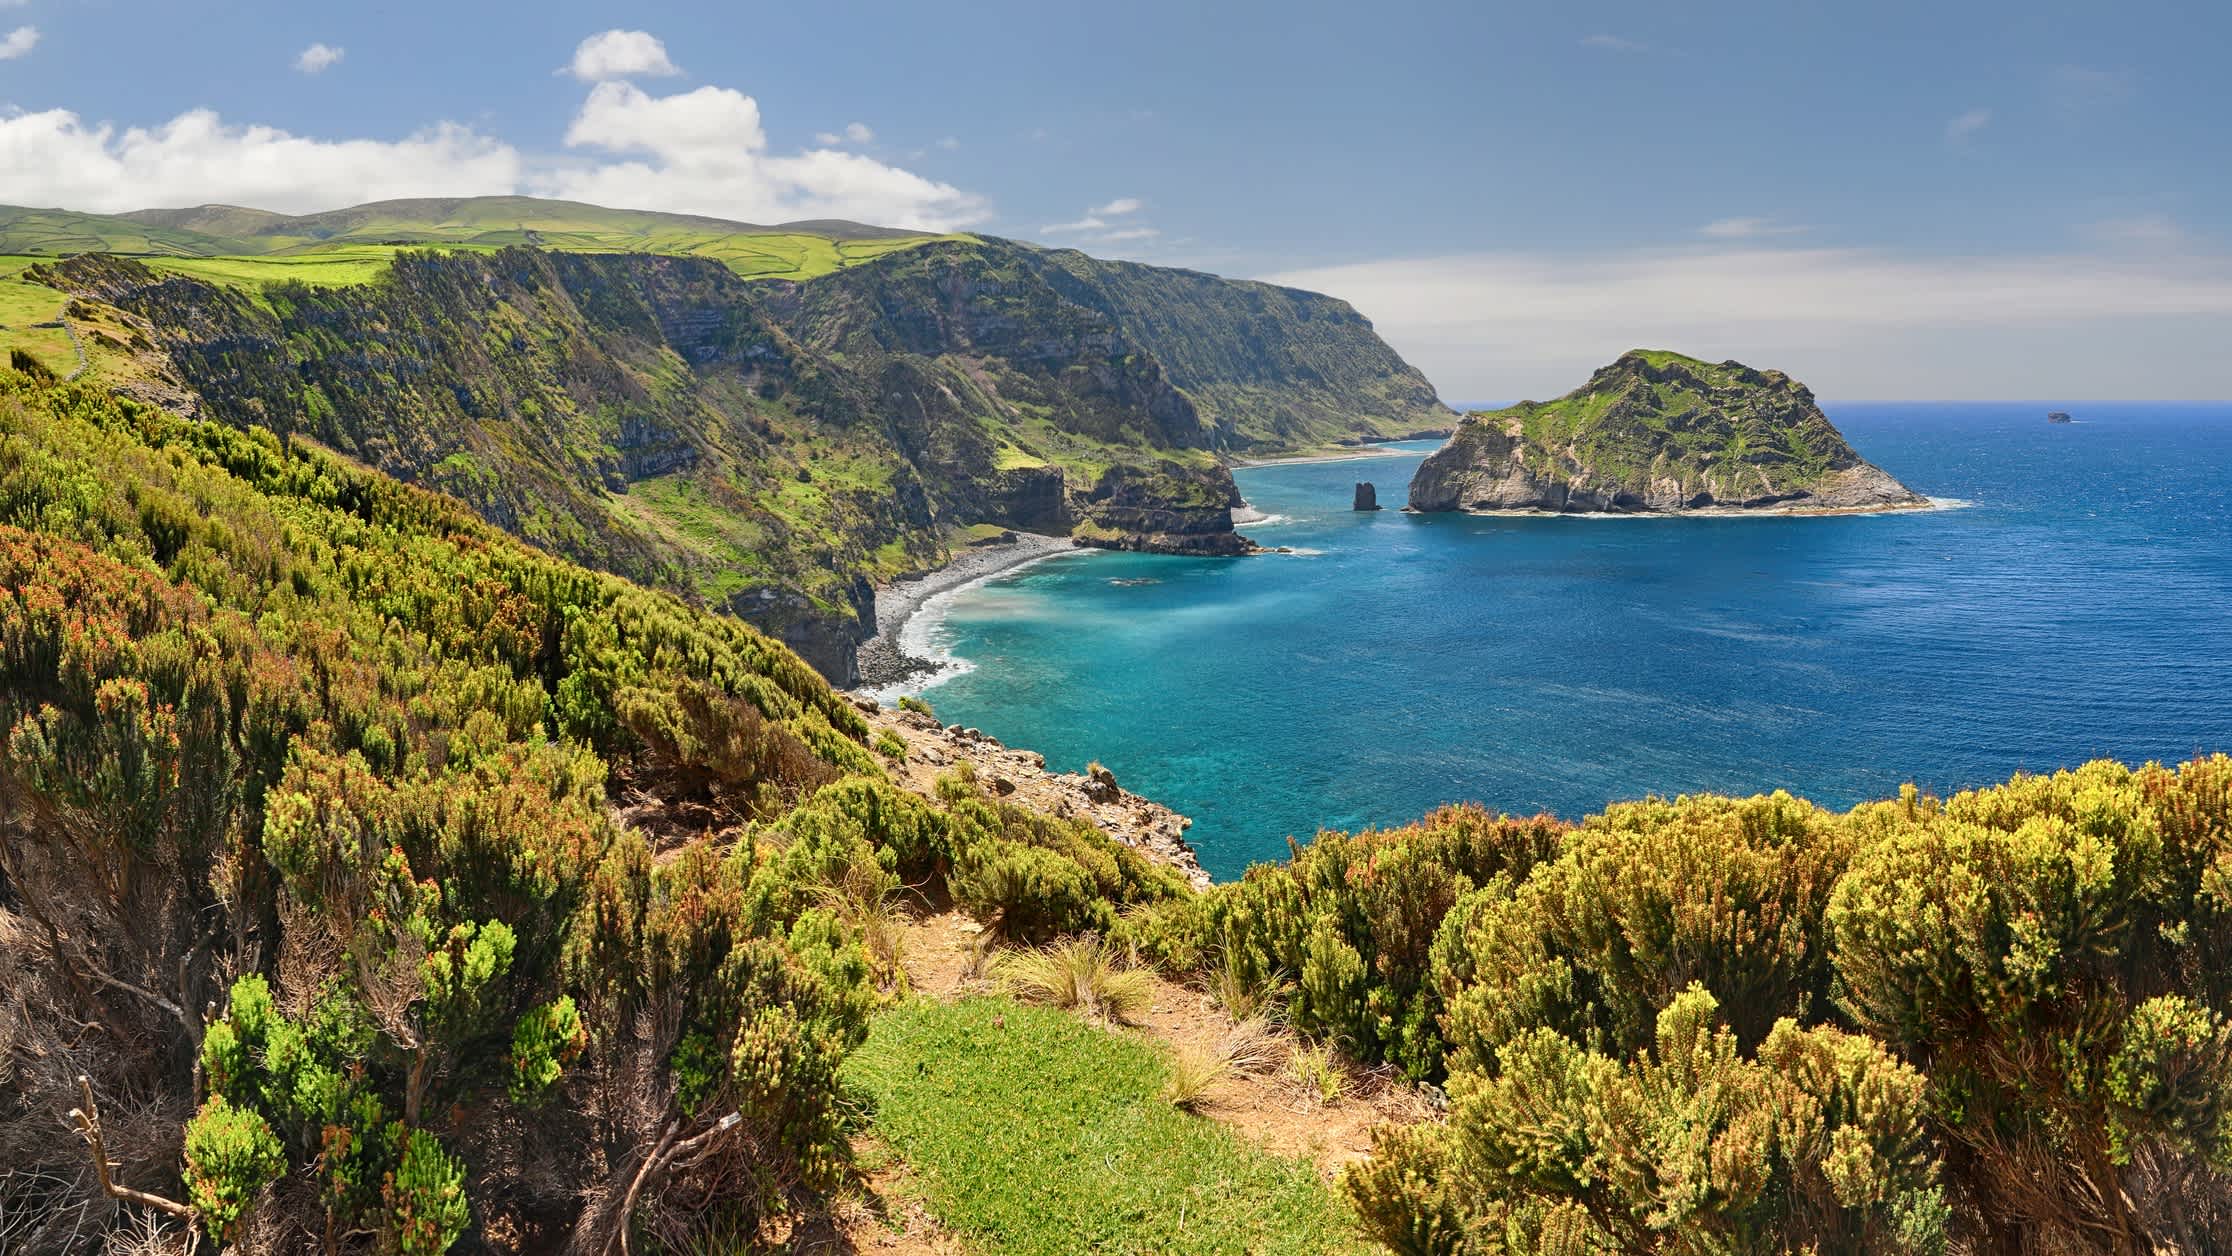 Panoramaaufnahme der Nordküste der Flores-Insel bei Ponta Delgada, Azoren, Portugal. 

